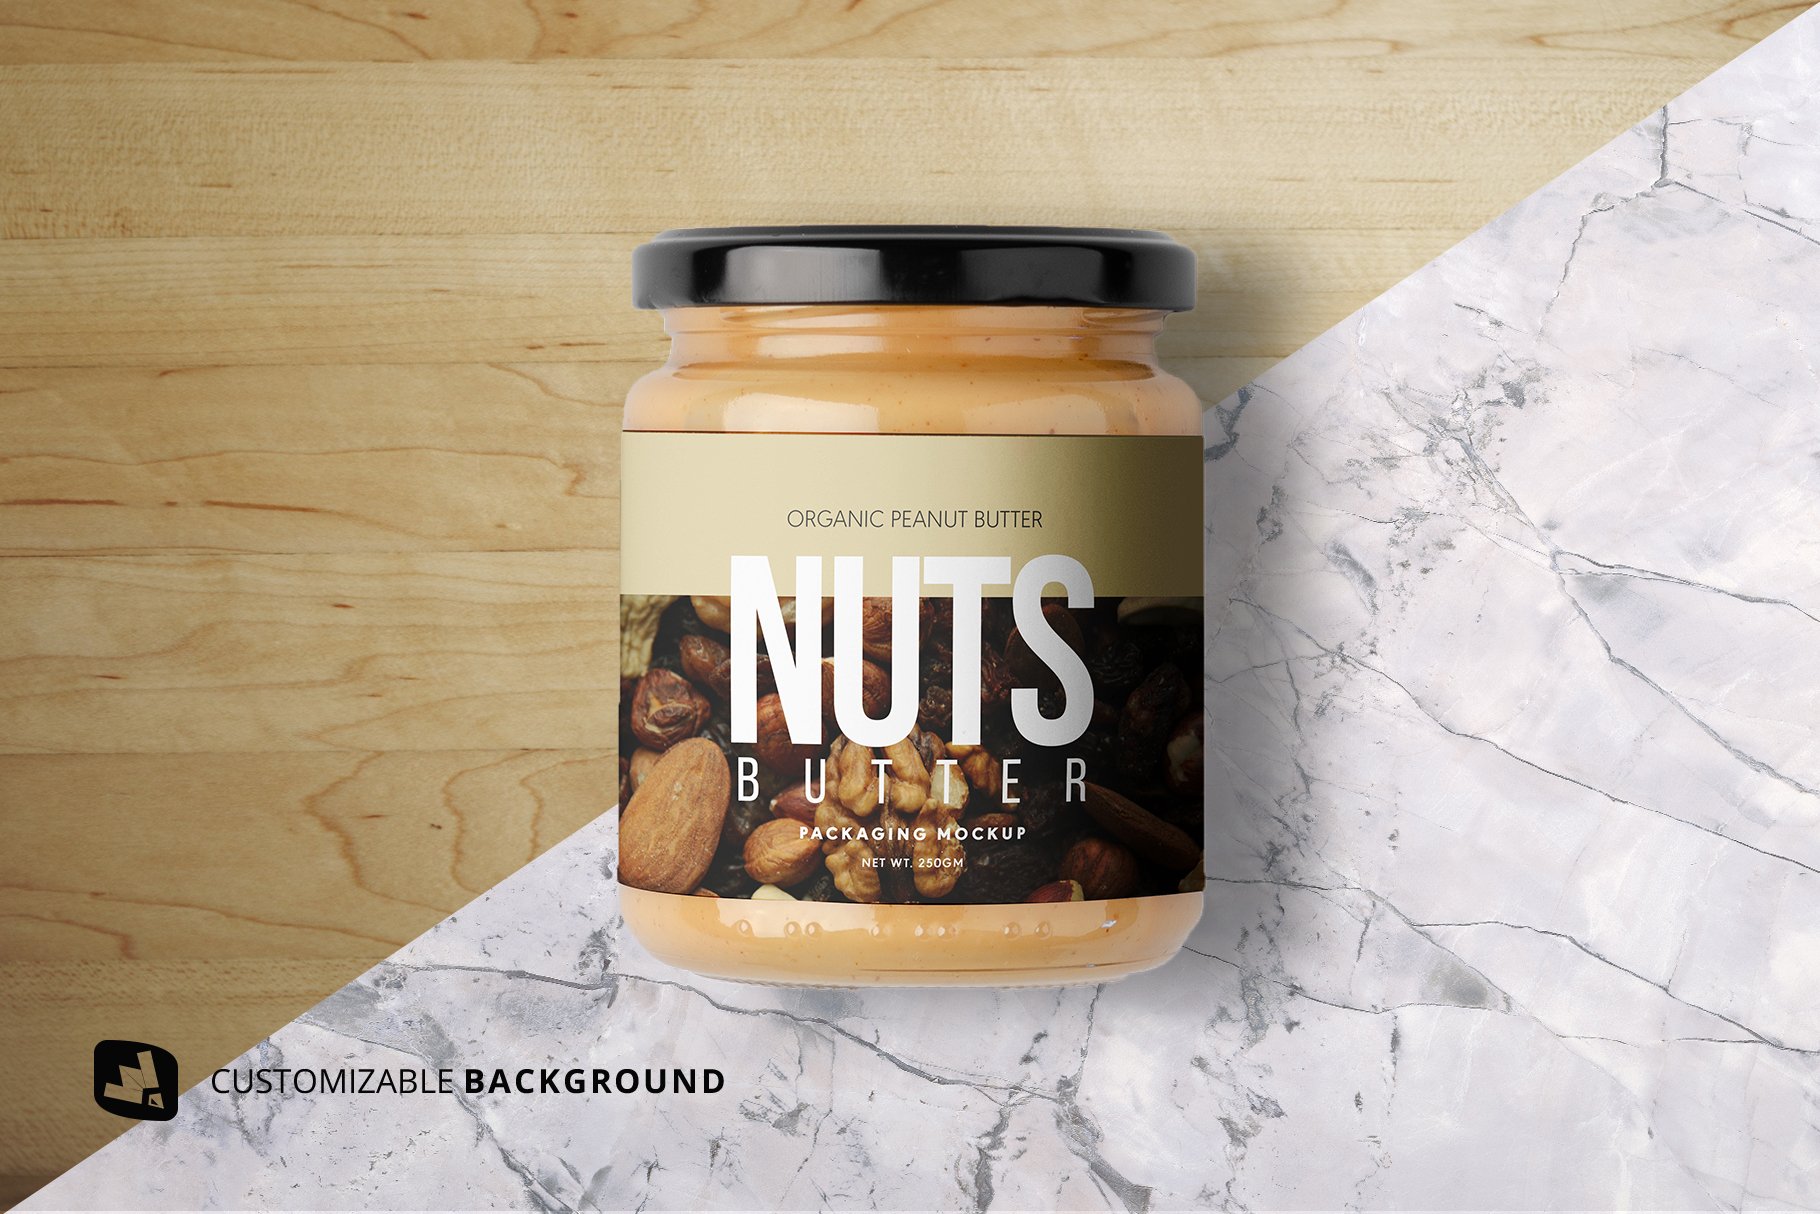 Organic Nut Butter Packaging Mockup